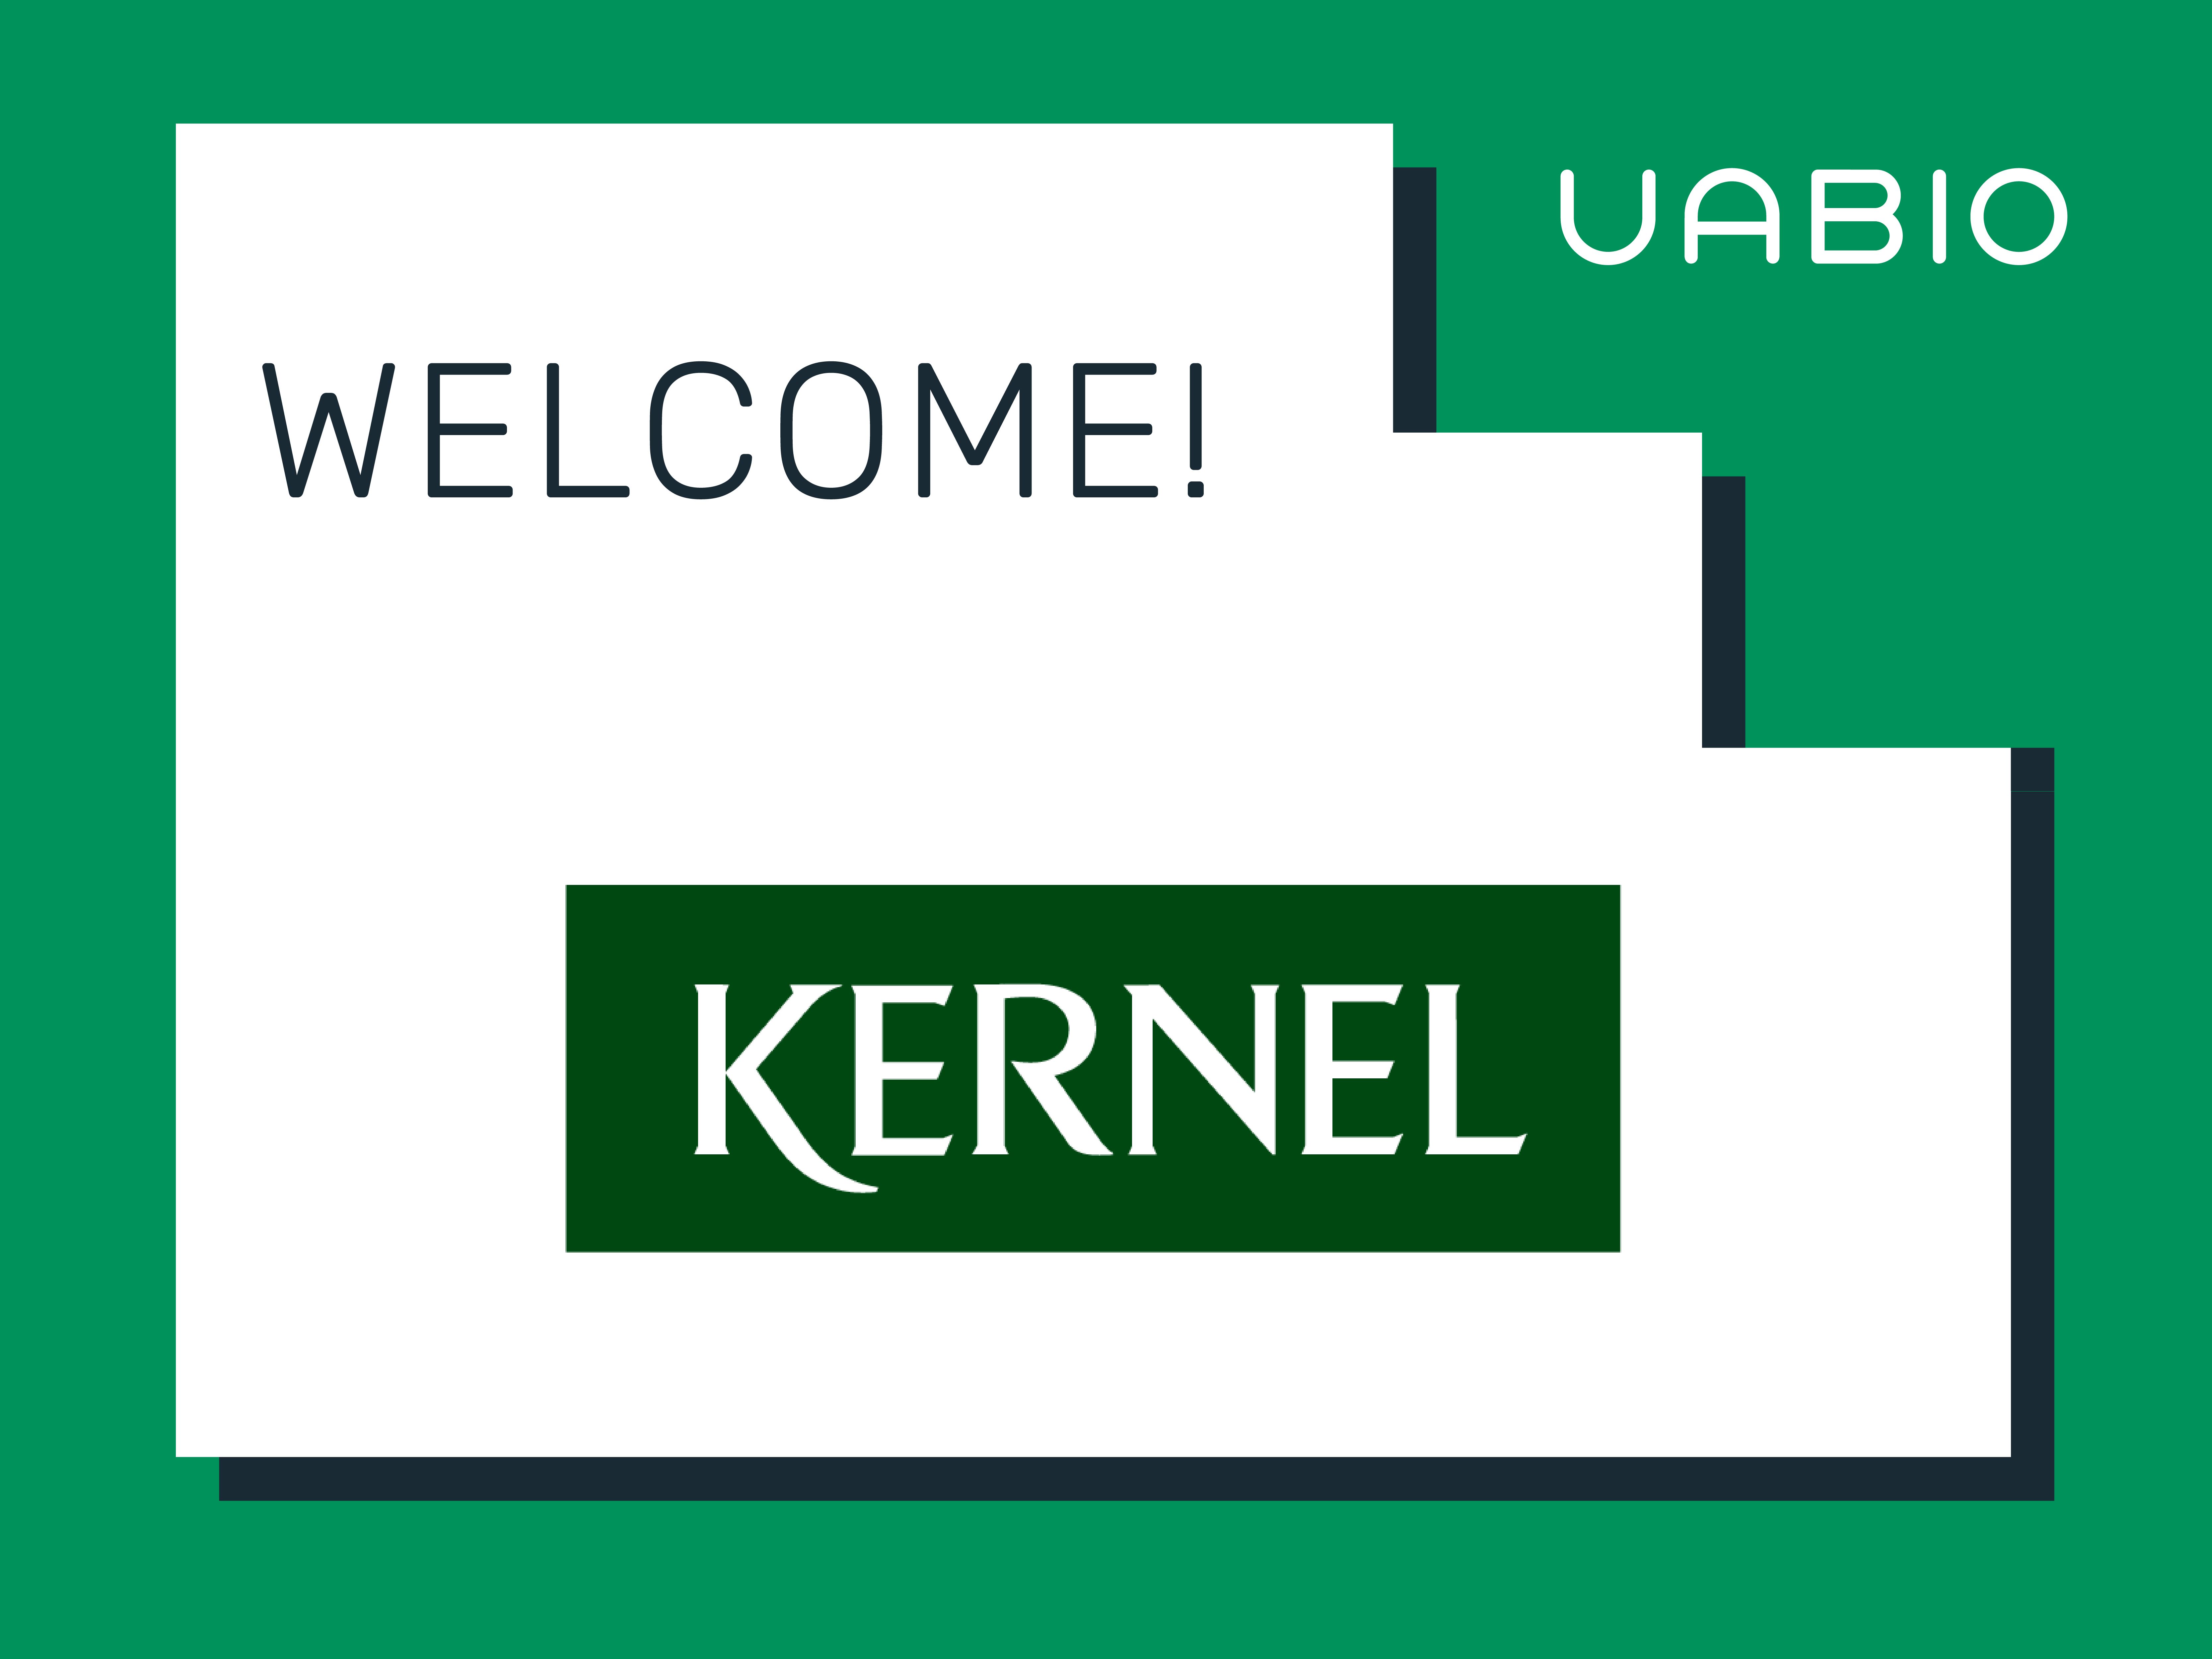 A new UABIO member Kernel company